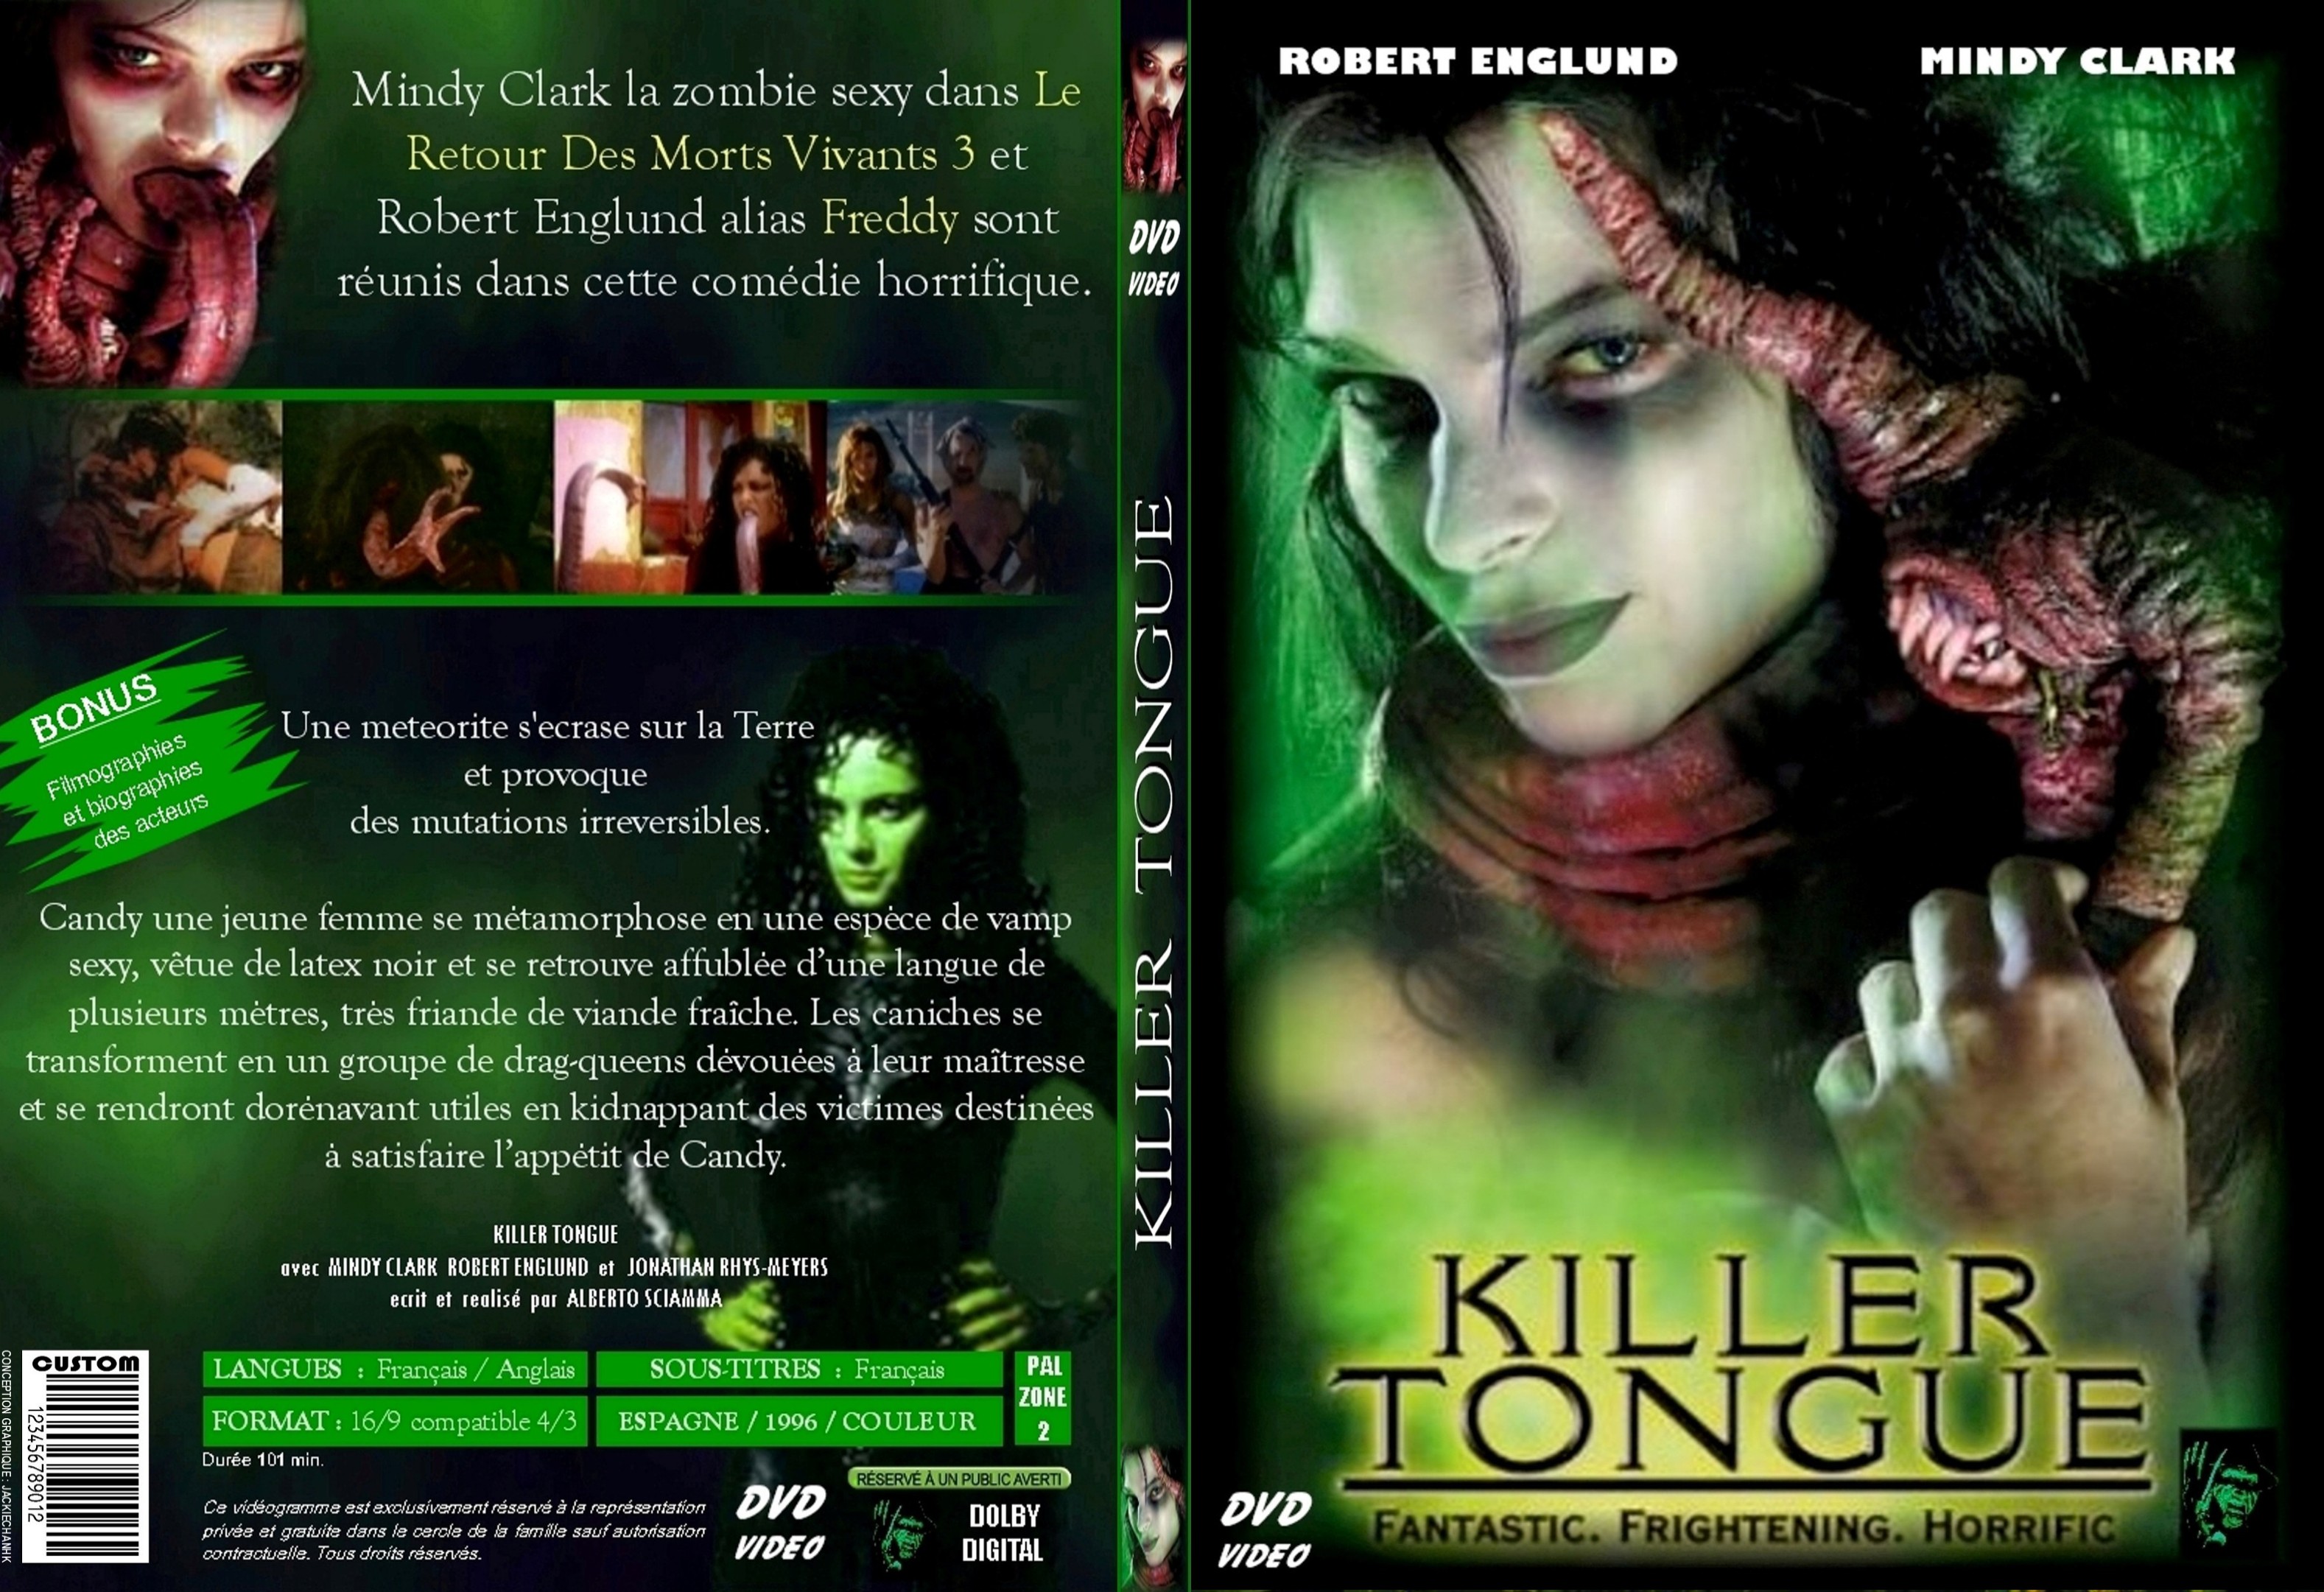 Jaquette DVD Killer Tongue custom - SLIM